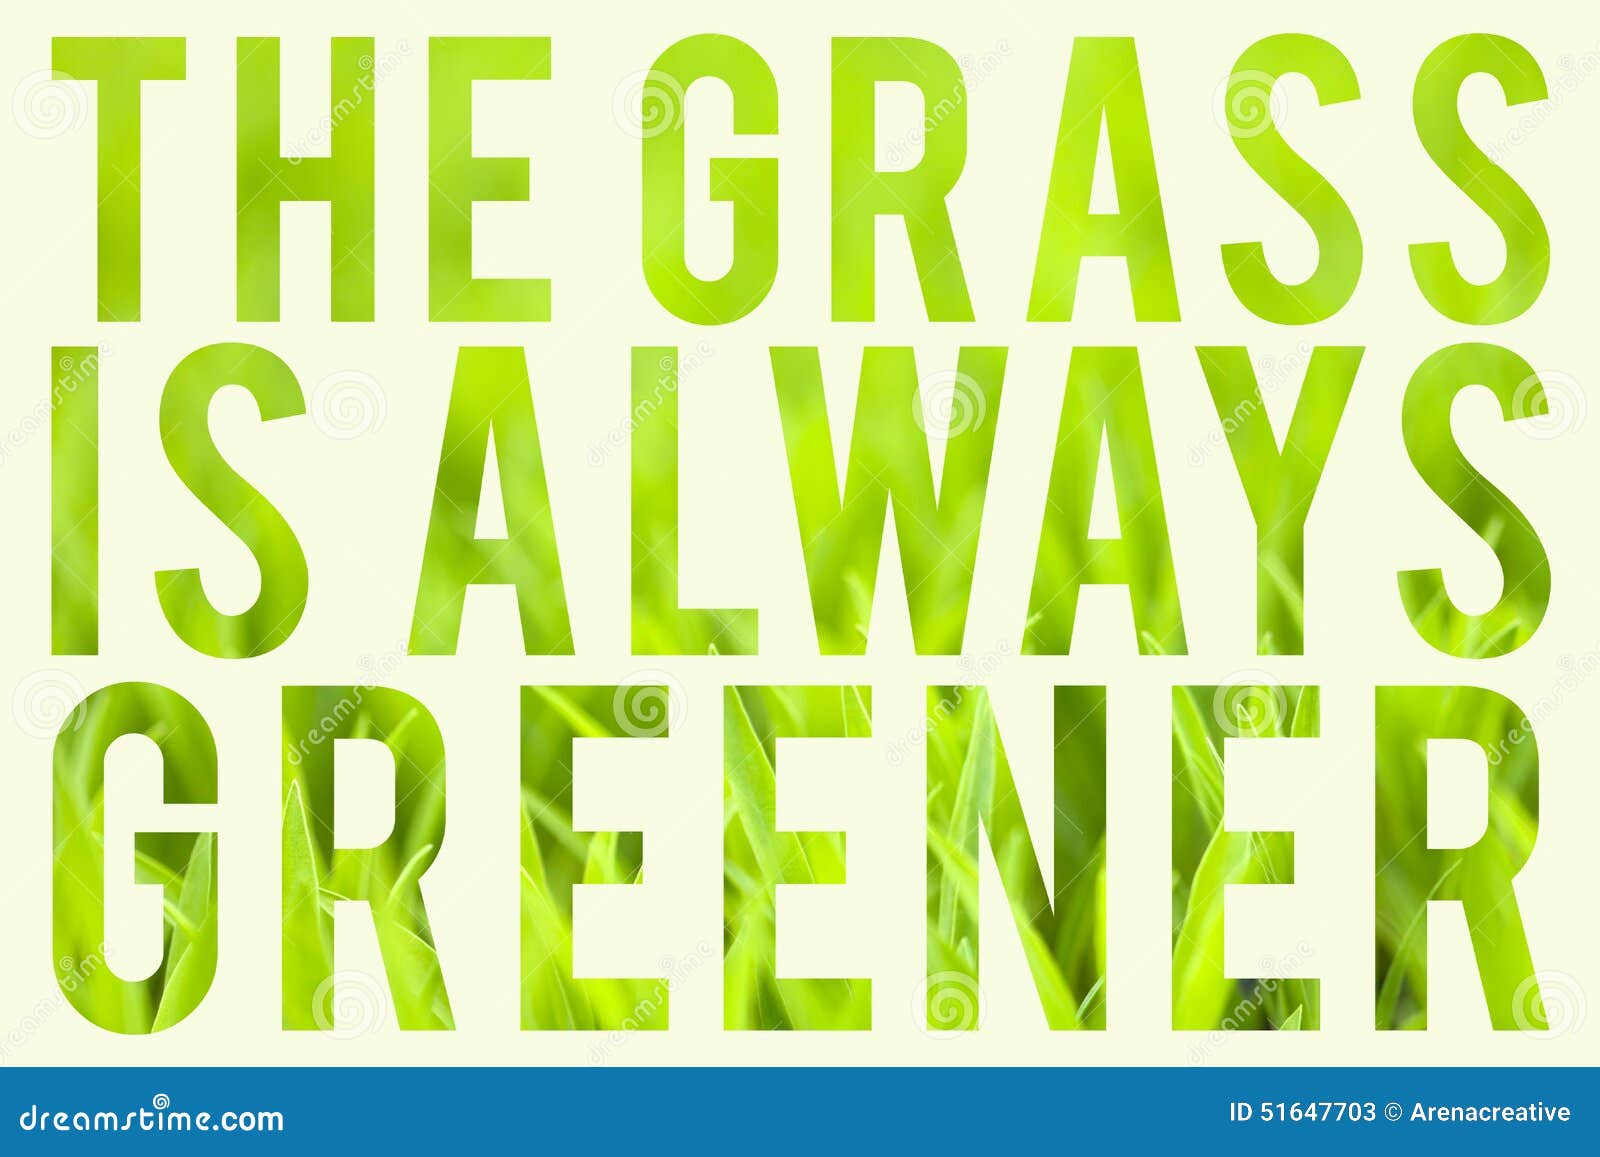 grass is always greener